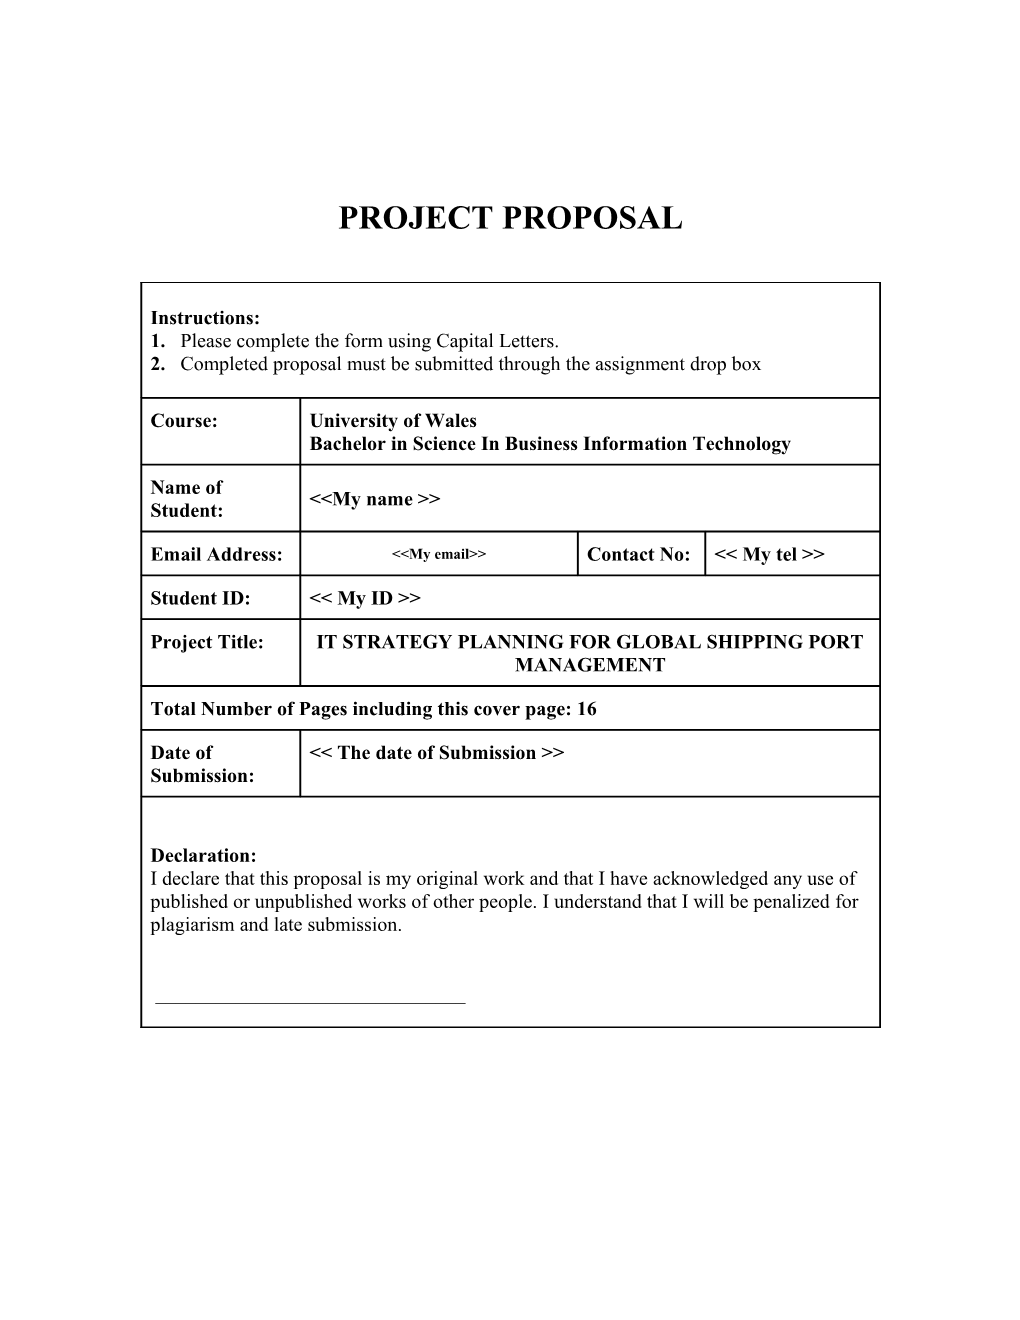 Appendix 1: a Sample Project Proposal Structure